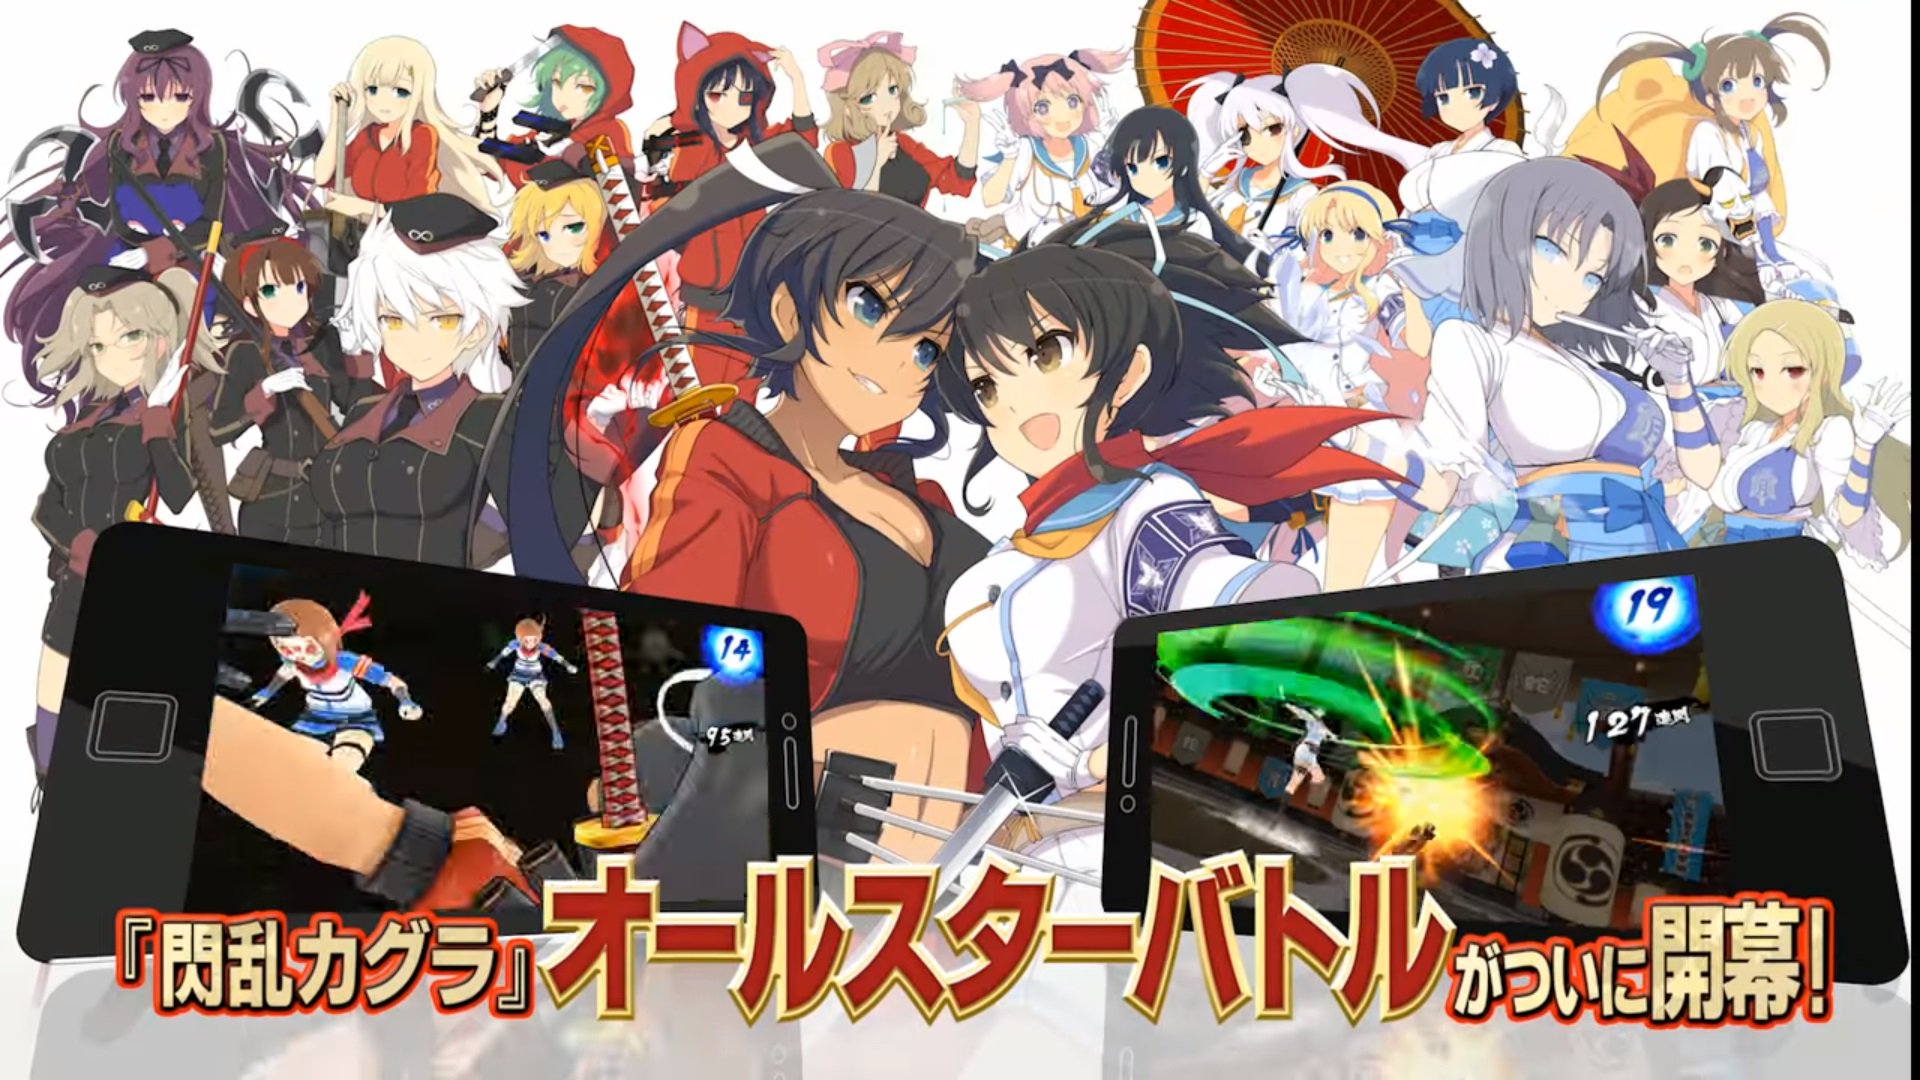 Qoo News] New Senran Kagura Mobile Game Announced for iOS/Android